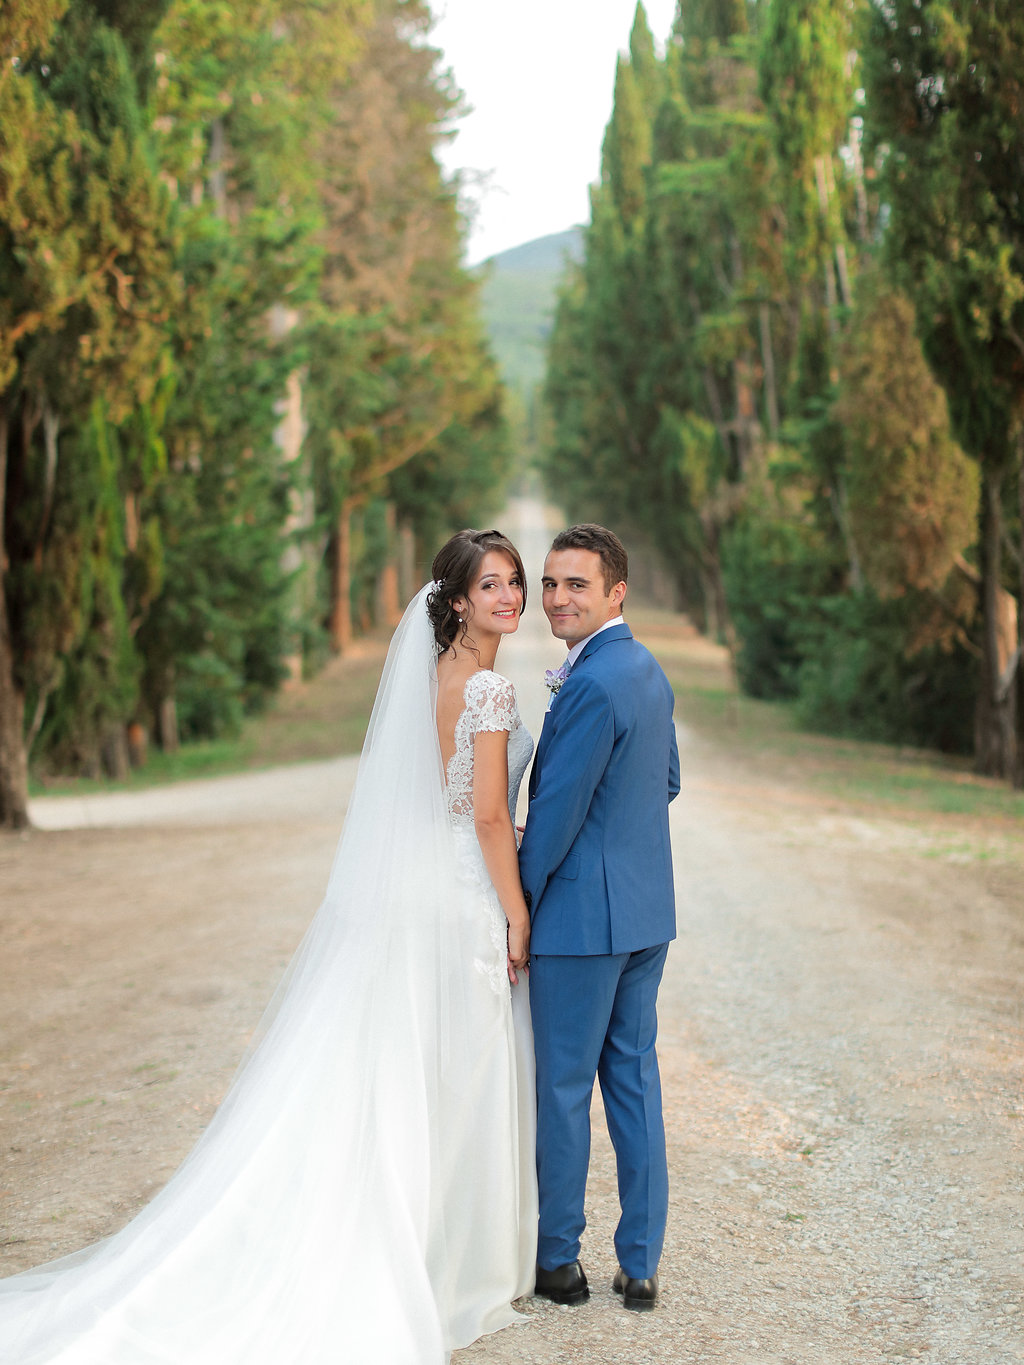 Luxury wedding blessing with secret garden lighting Tuscany